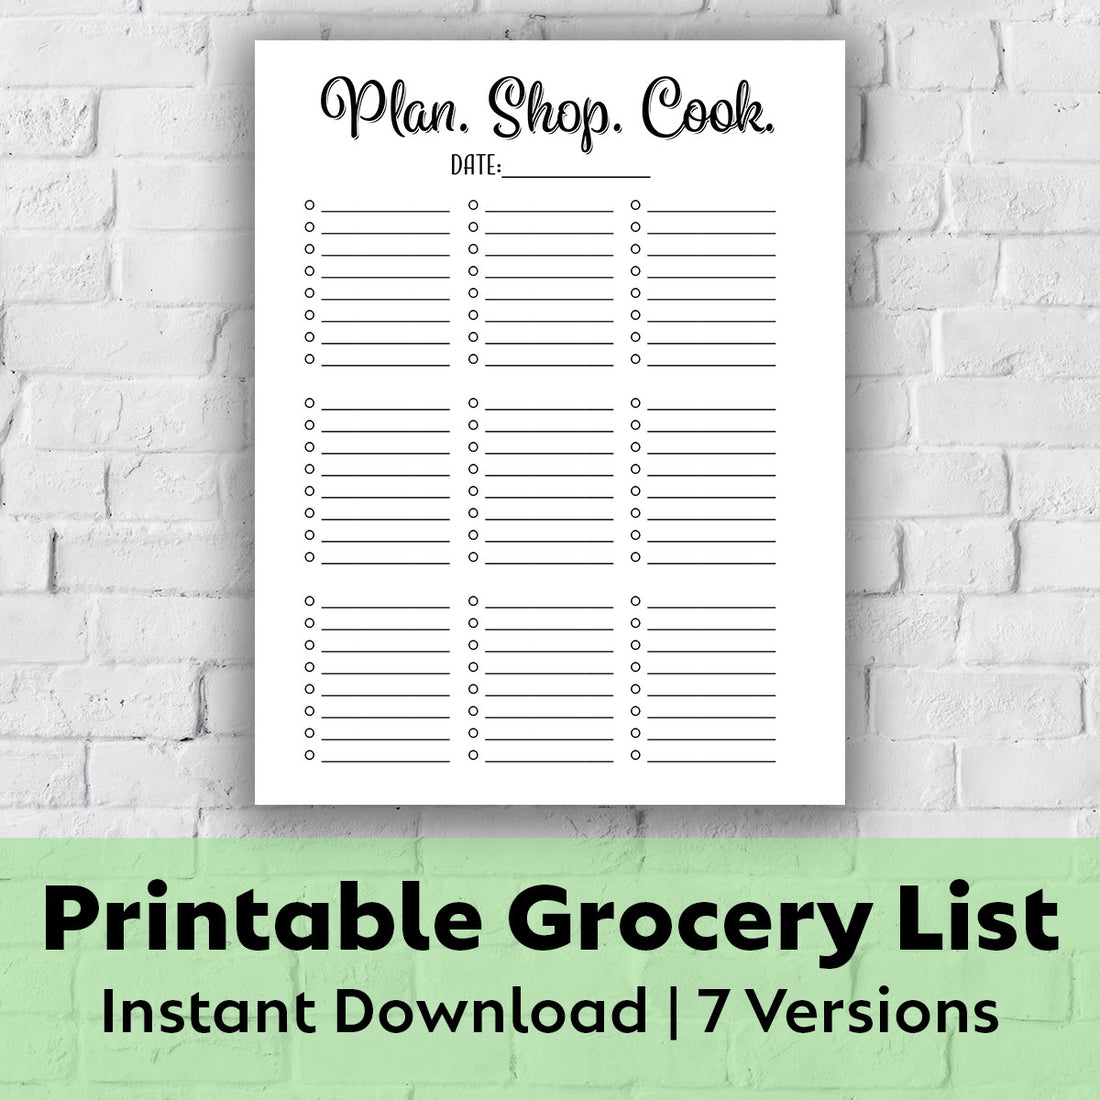 Printable Grocery List - Plan. Shop. Cook.